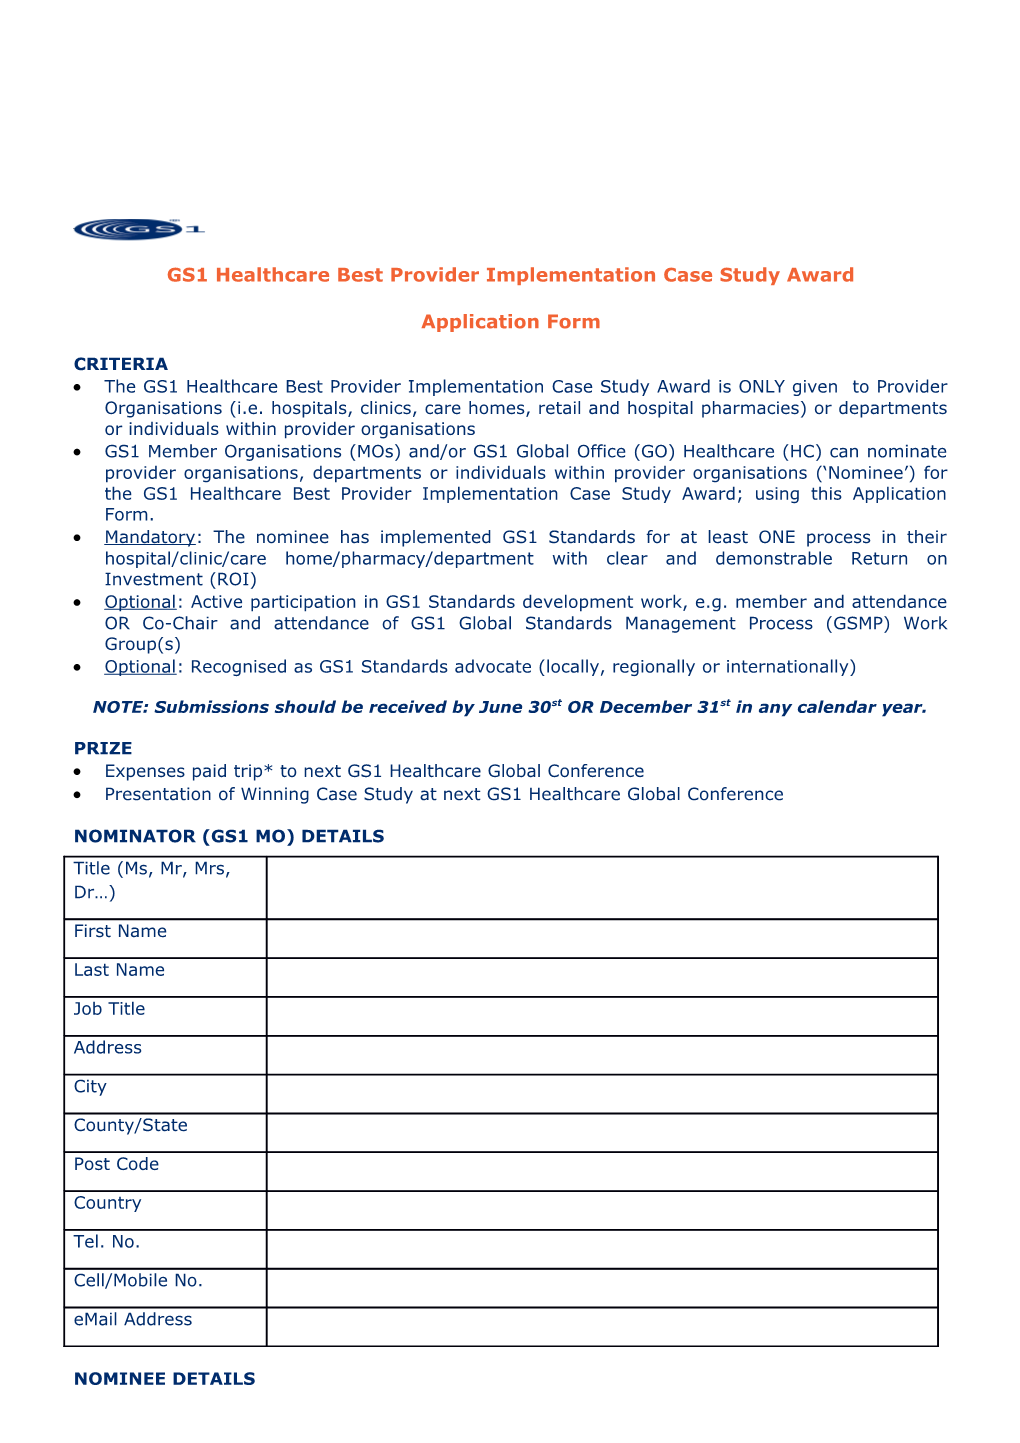 GS1 Healthcare Best Provider Implementation Case Study Award